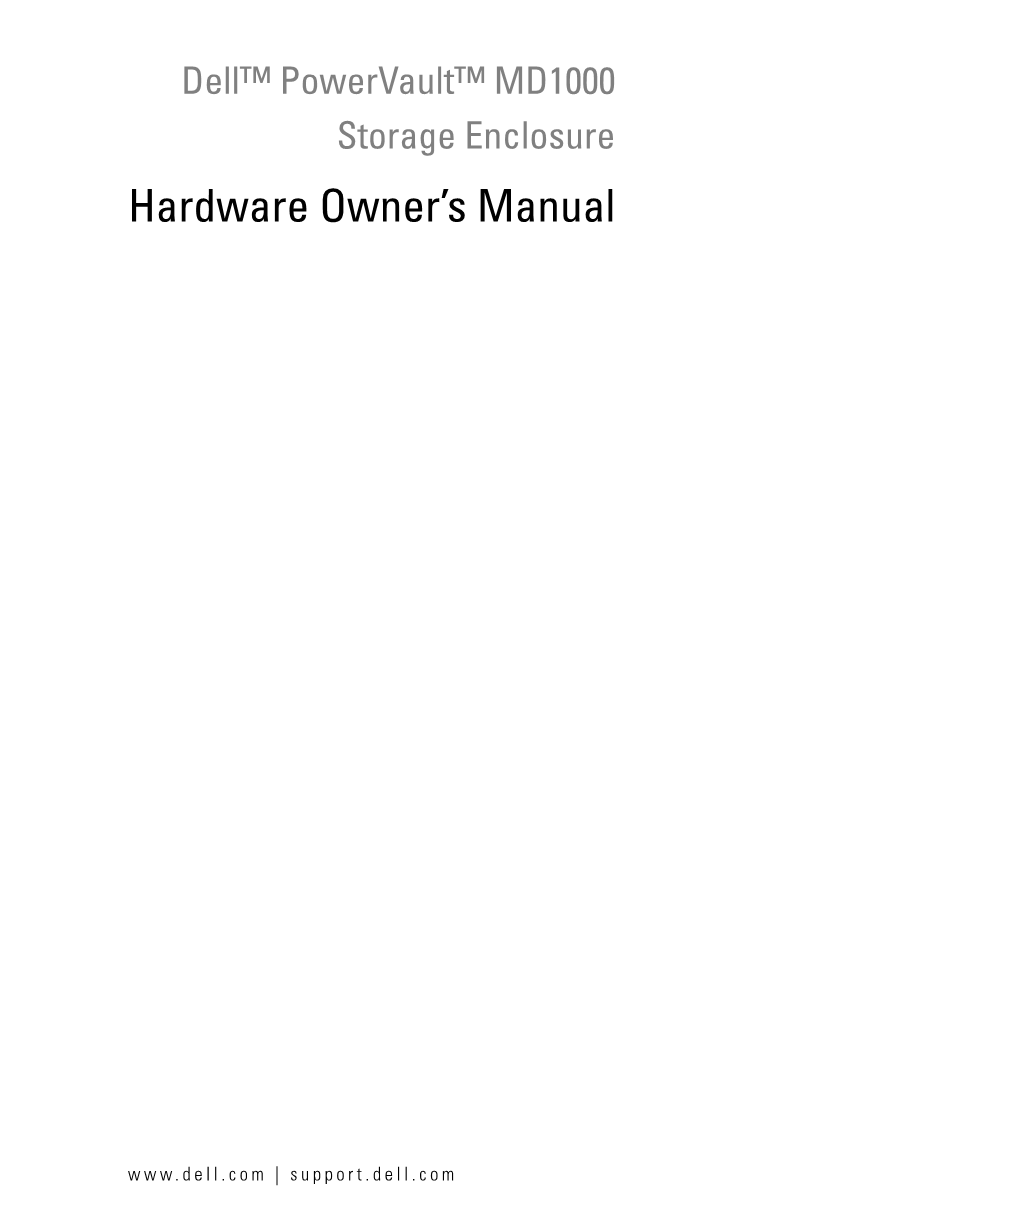 Hardware Owner's Manual